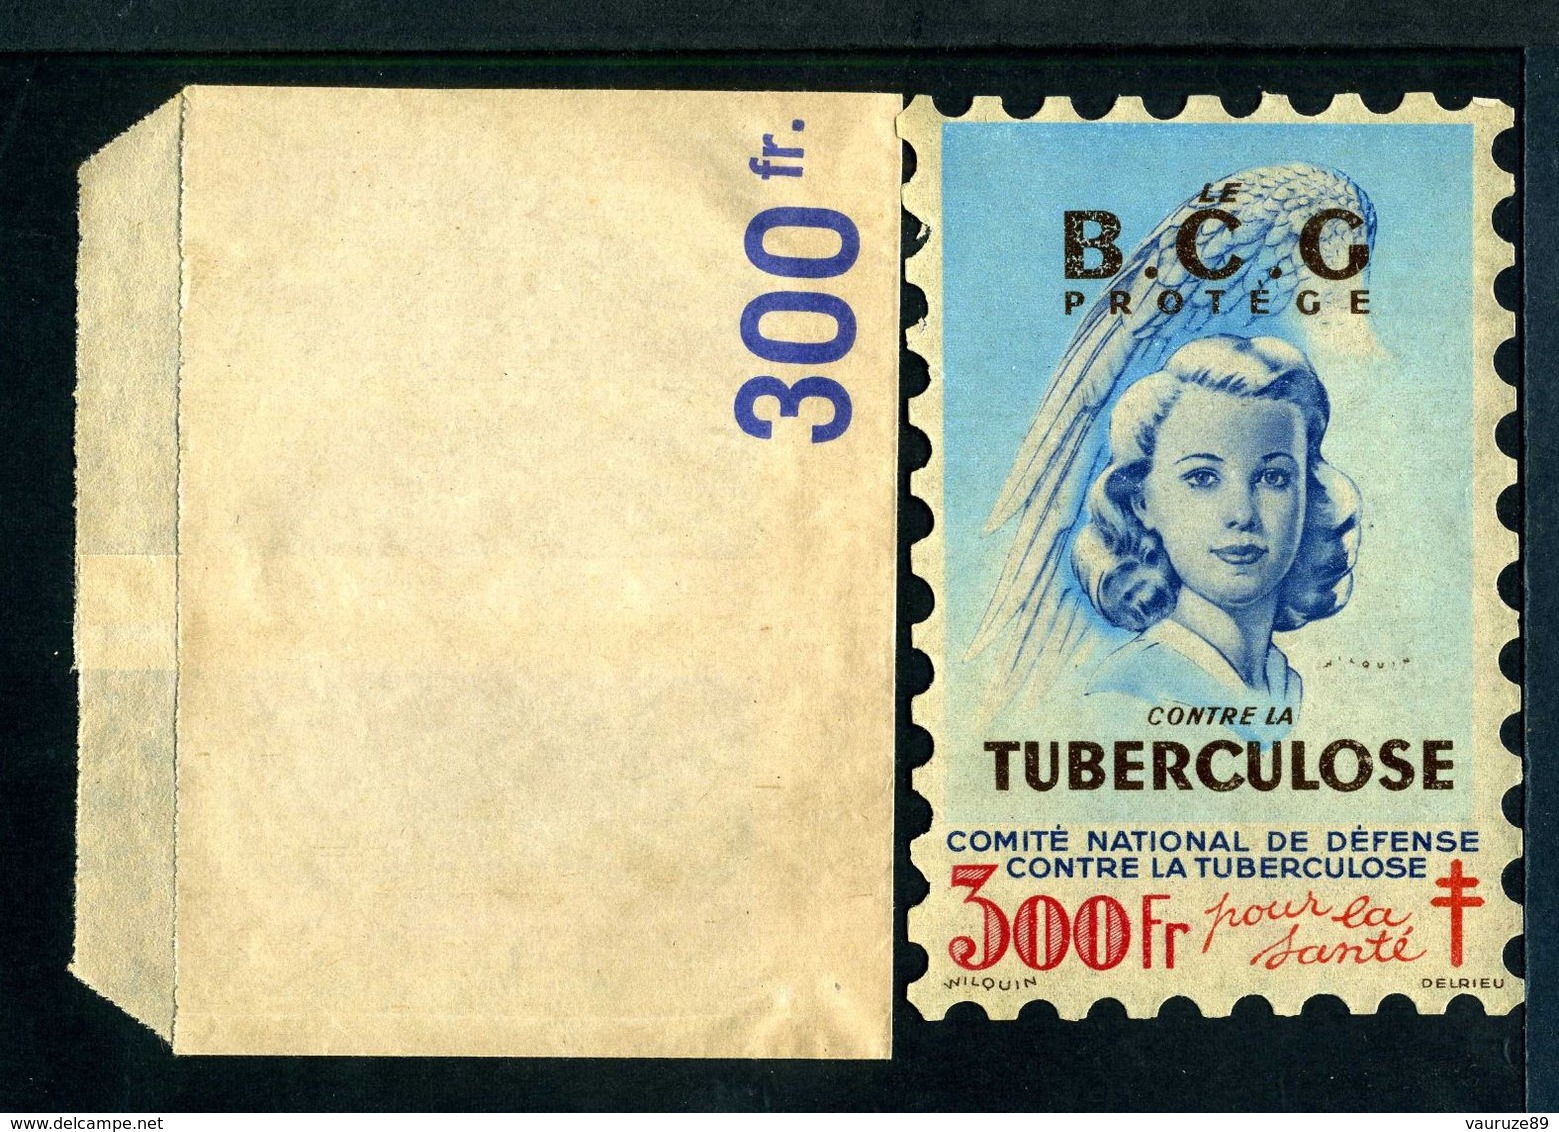 Tuberculose Antituberculeux - Grand Timbre De 1948  "300 Fr Pour La Santé" - Avec Sa Pochette . - Antitubercolosi